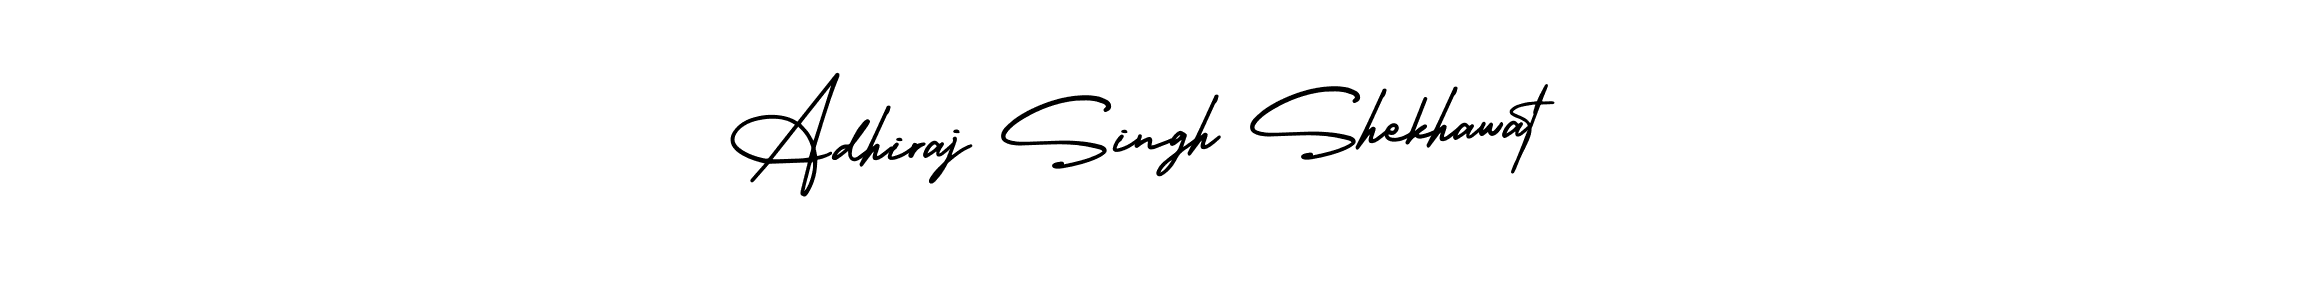 Best and Professional Signature Style for Adhiraj Singh Shekhawat. AmerikaSignatureDemo-Regular Best Signature Style Collection. Adhiraj Singh Shekhawat signature style 3 images and pictures png